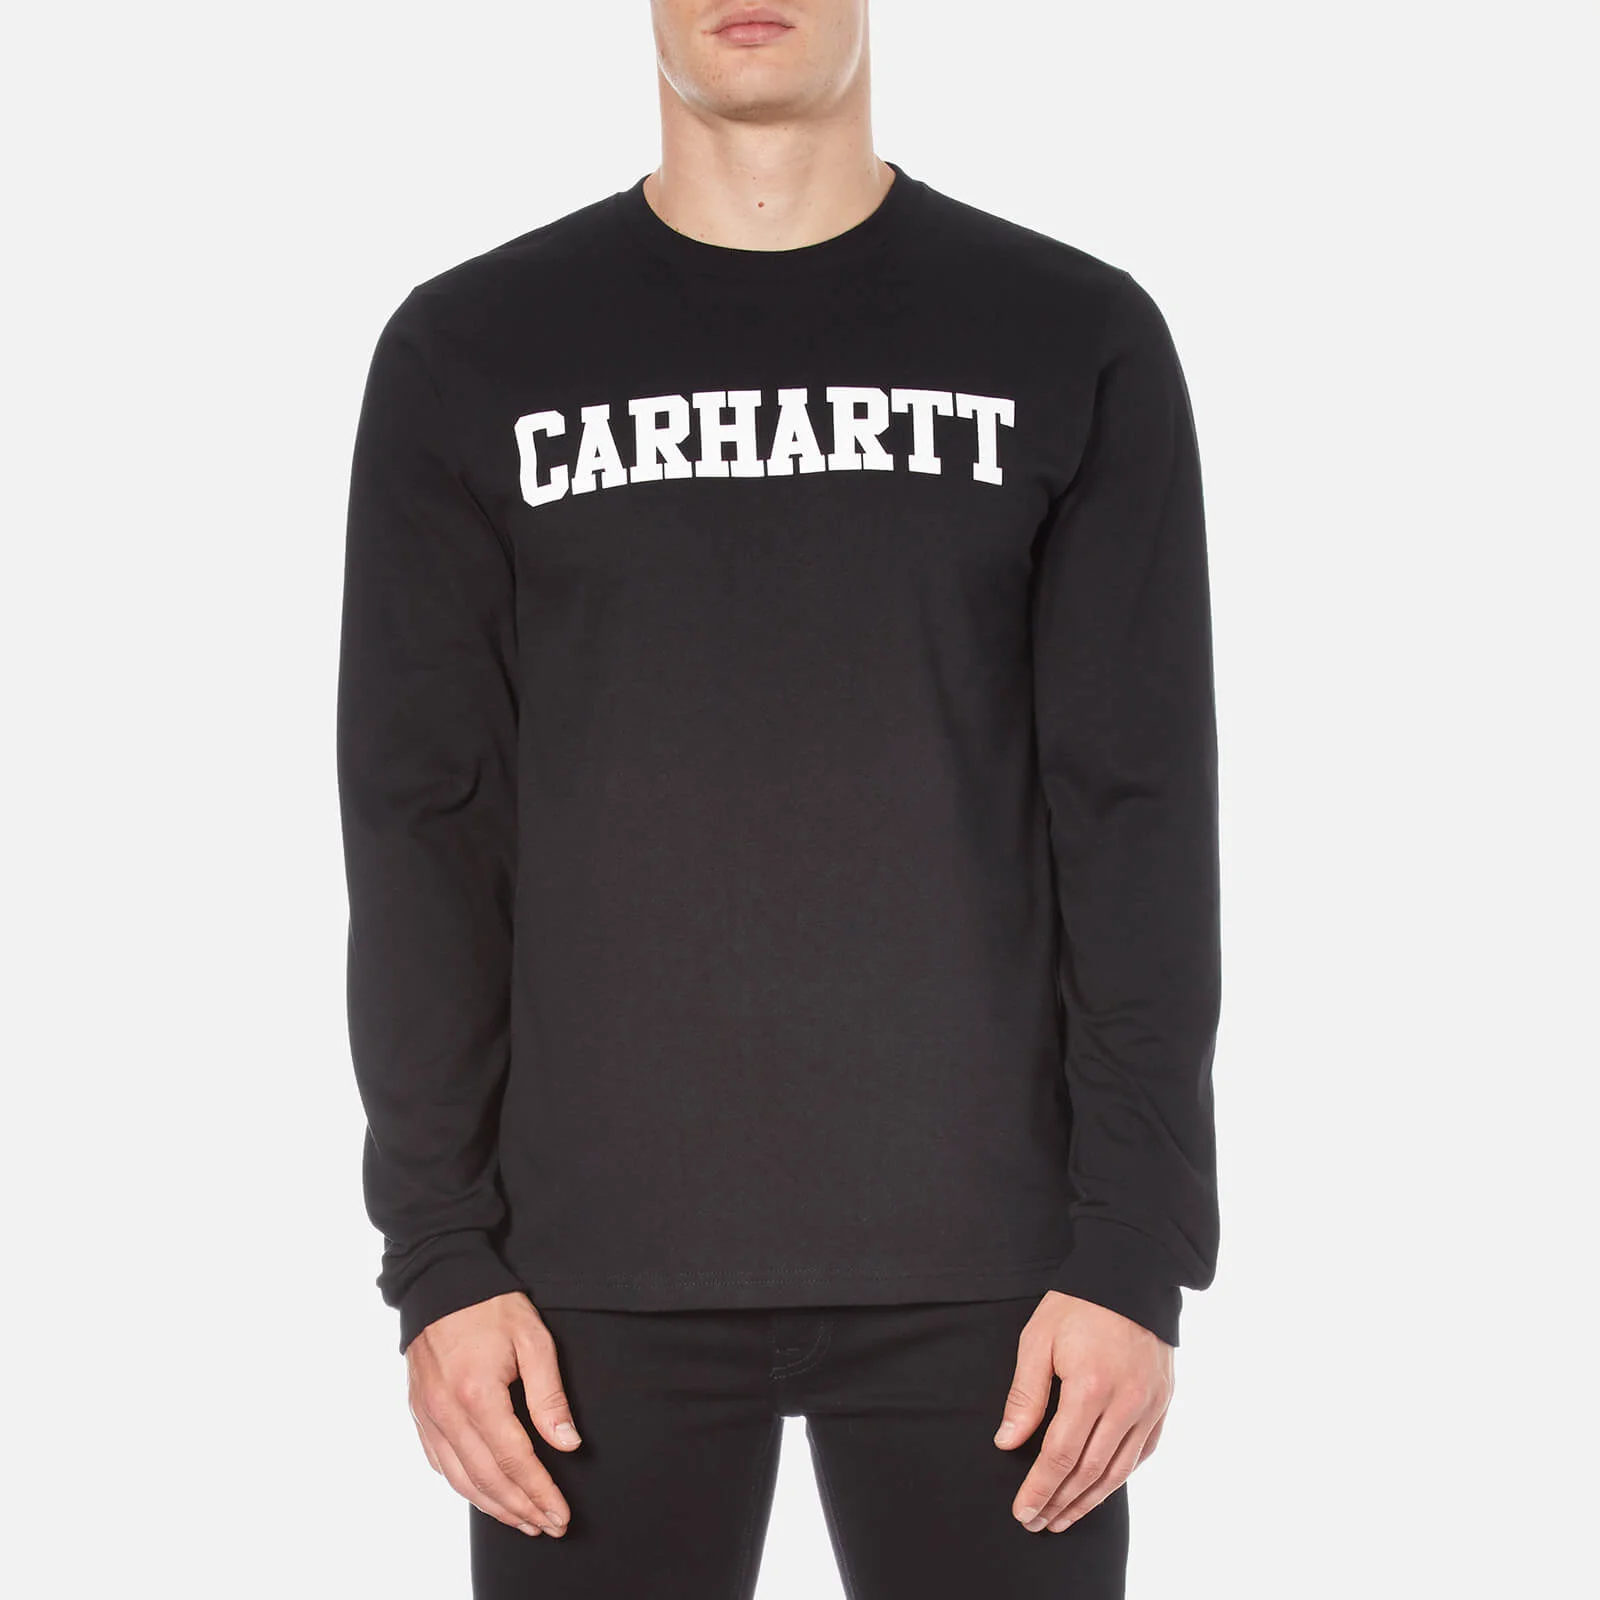 Carhartt Men's Long Sleeve College T-Shirt - Black/White Image 1